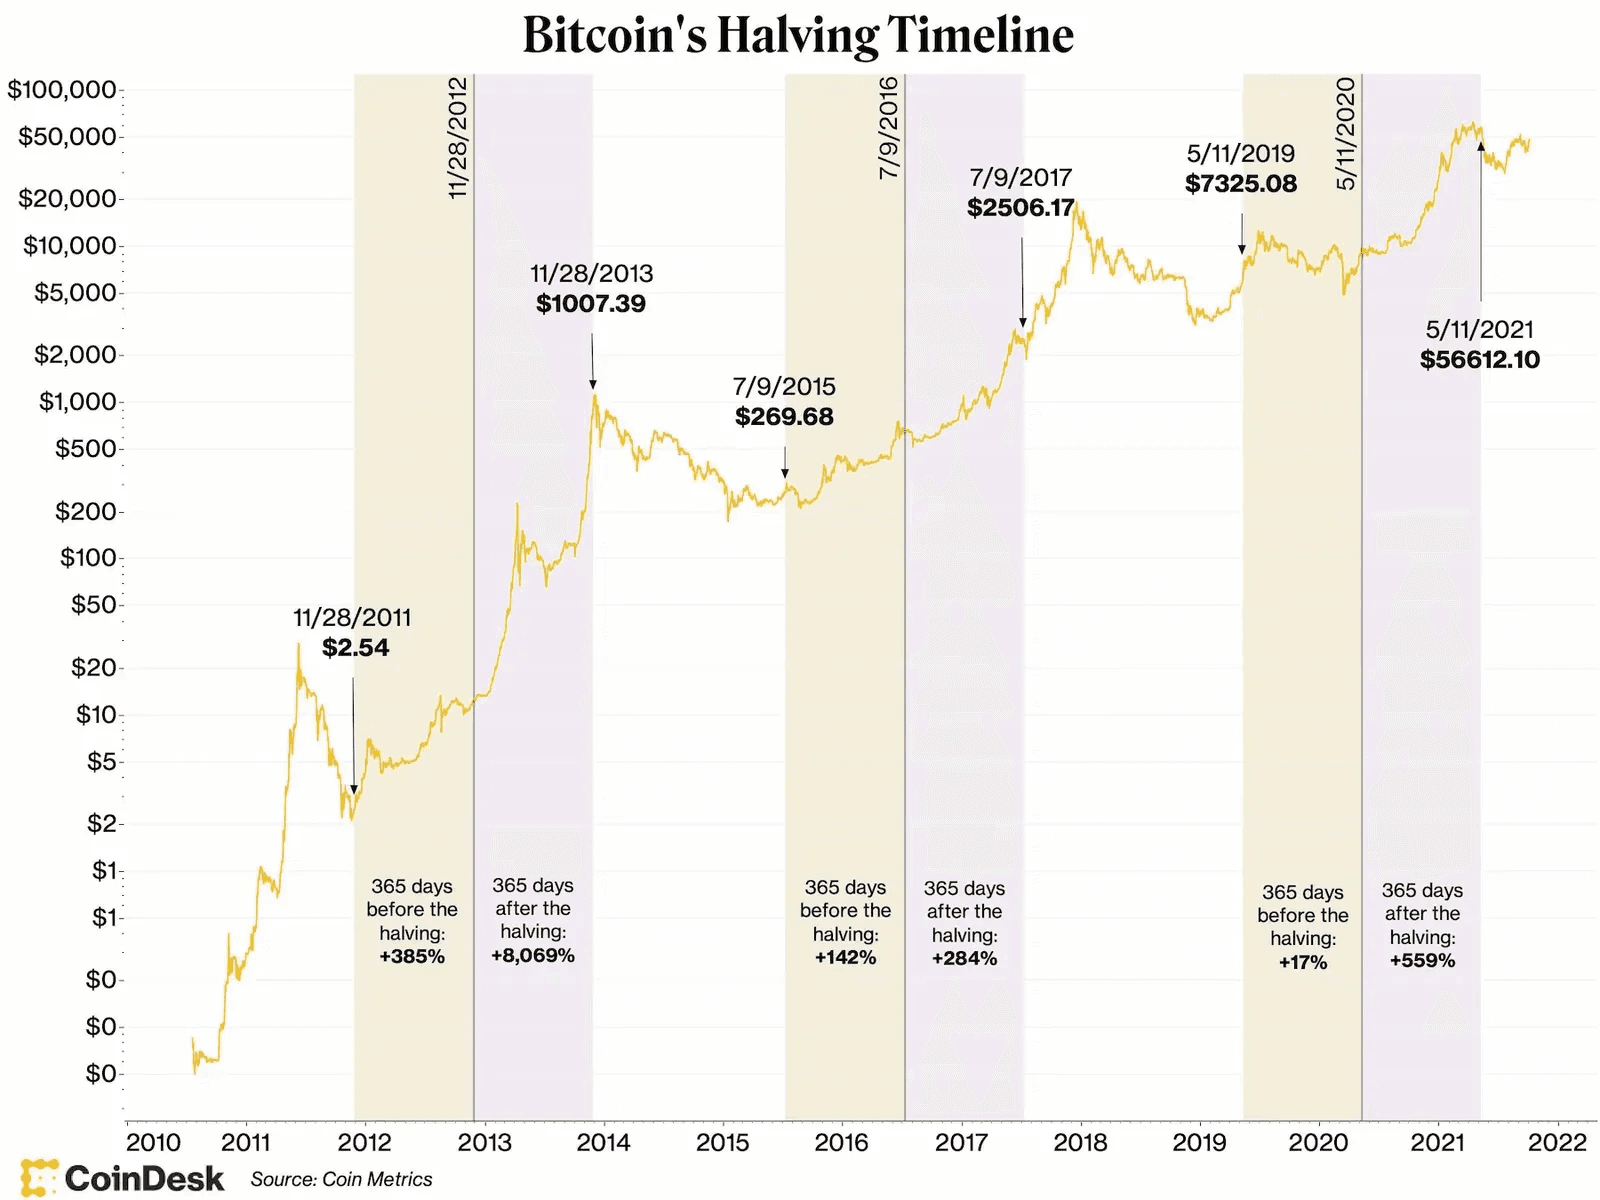 Bitcoin Halving Dates History